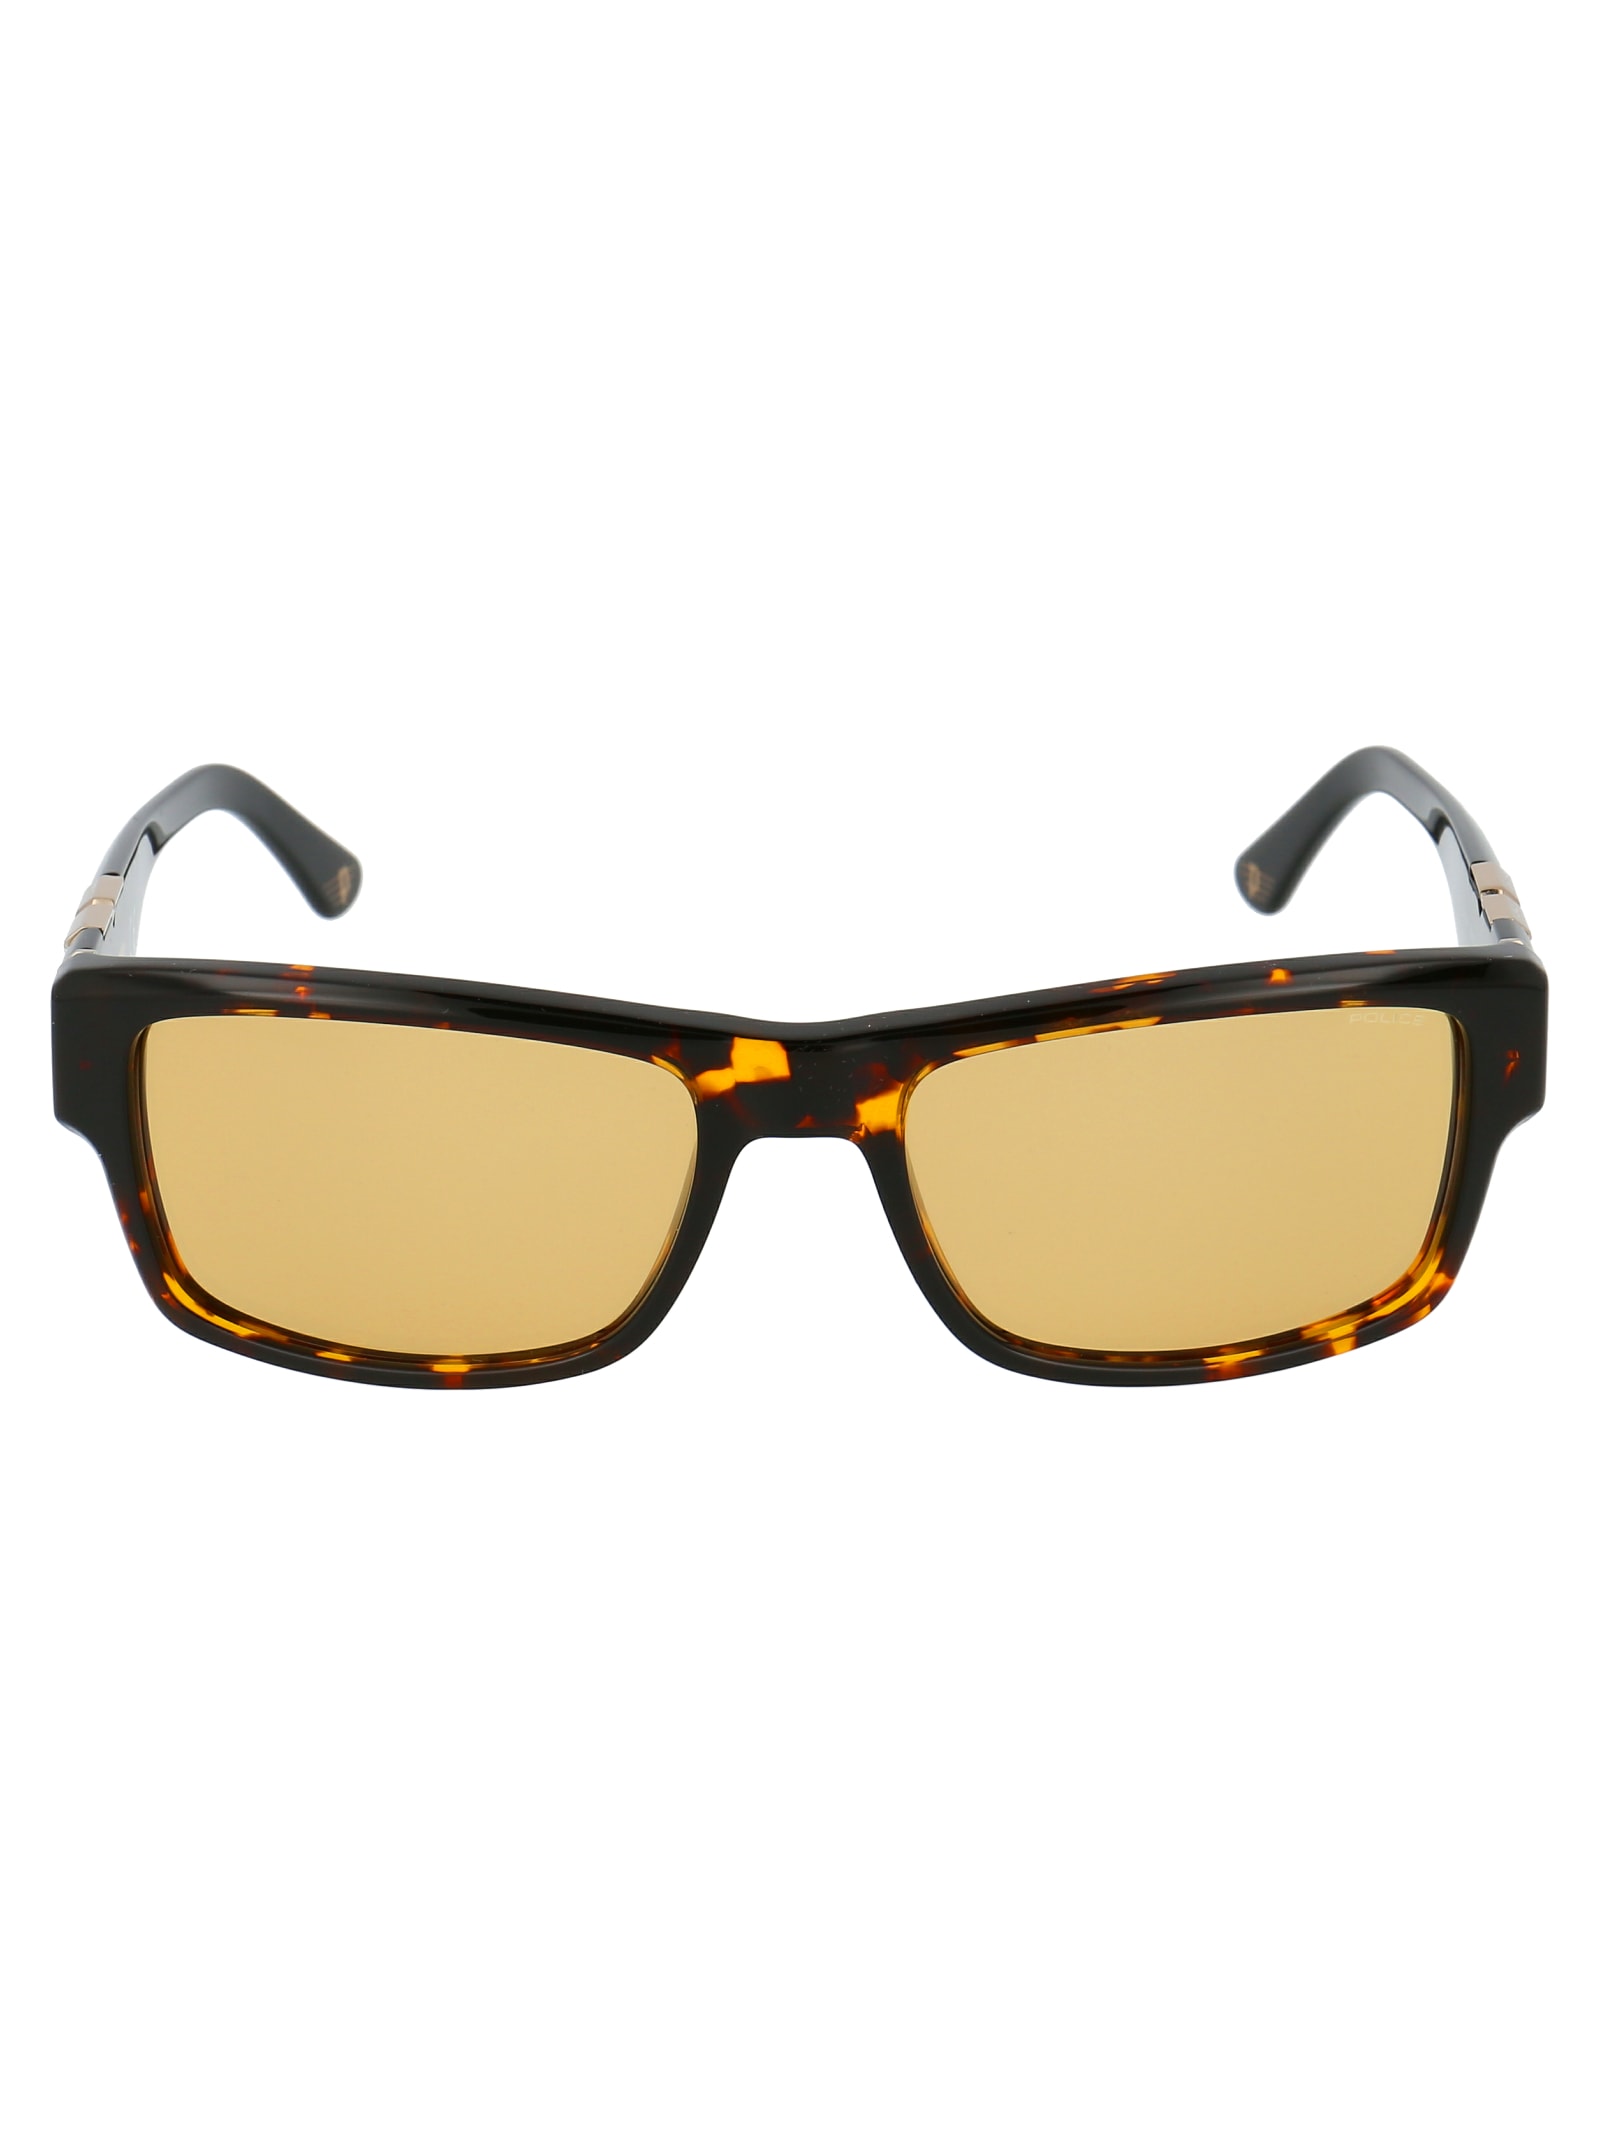 Spl967 Sunglasses